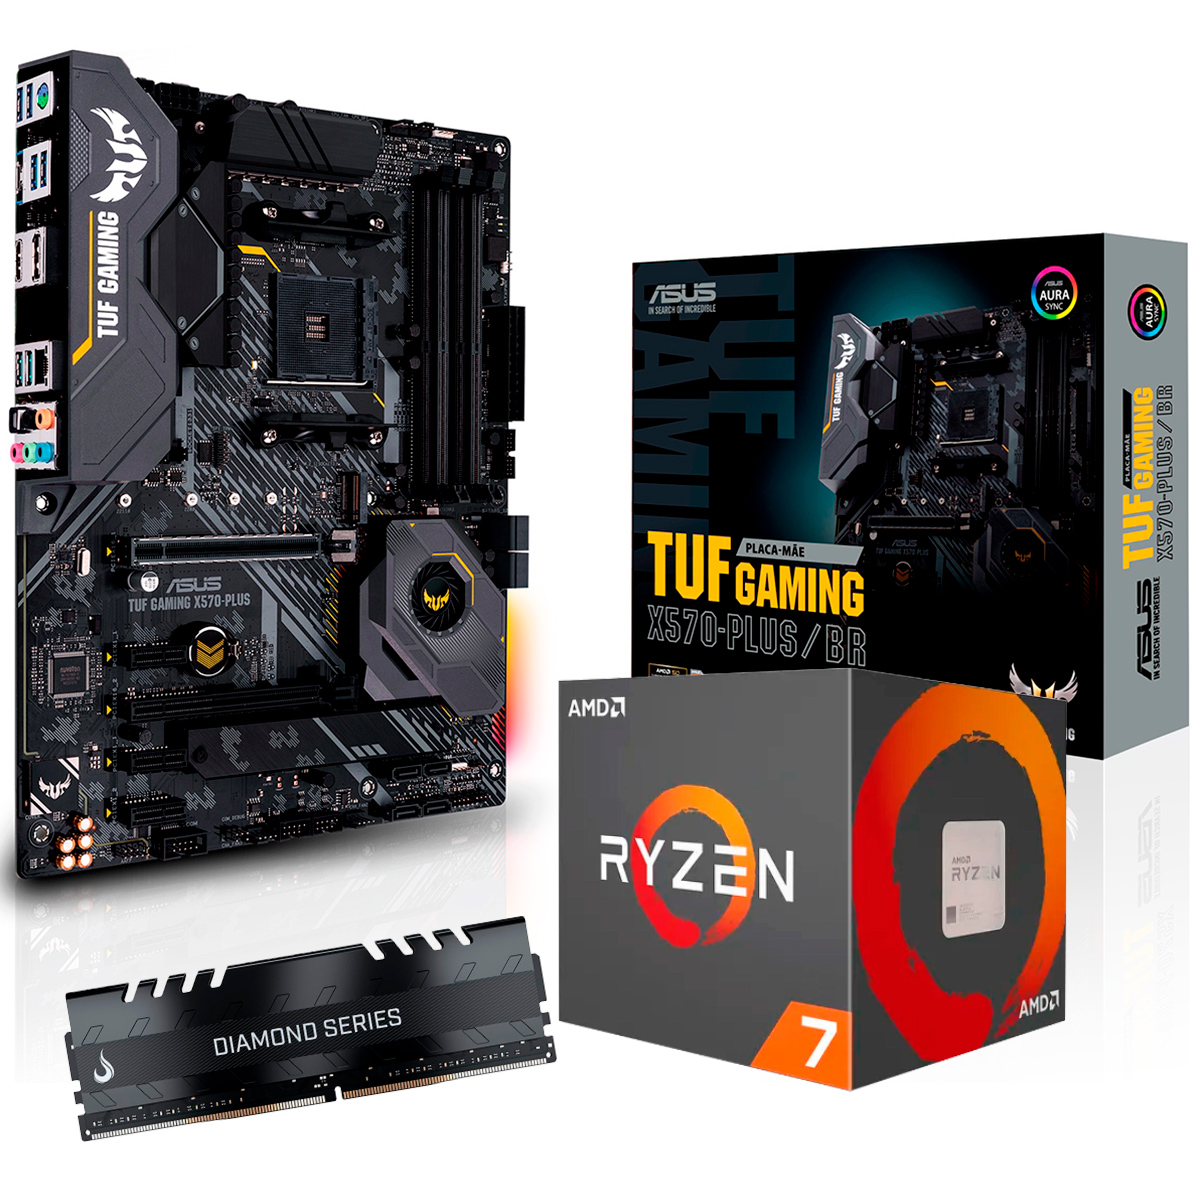 Kit Upgrade Processador AMD Ryzen™ 7 3700X + Placa Mãe Asus TUF GAMING X570 PLUS/BR + Memória 8GB DDR4